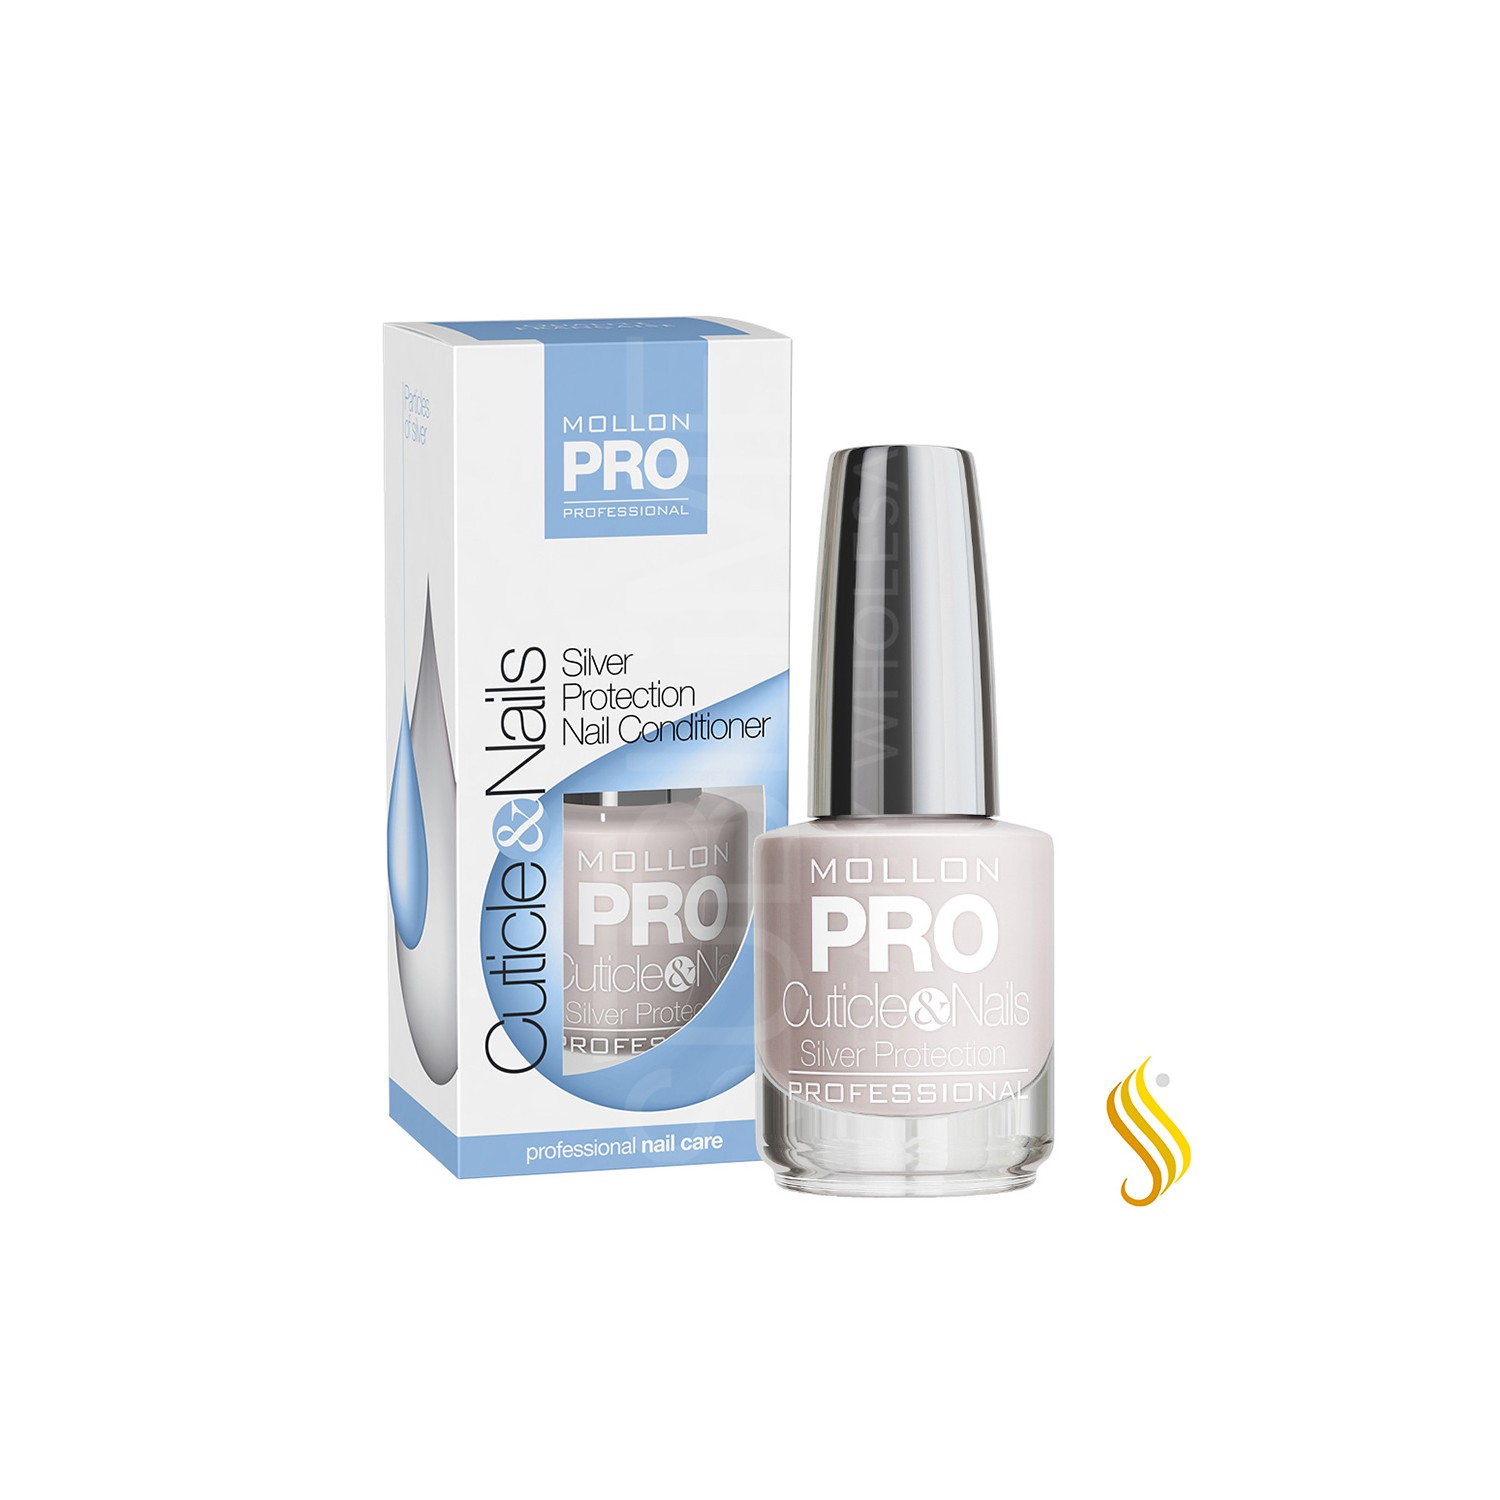 Mollon Pro Silver Cuticle&Nails Protection Nail Conditioner 15ml